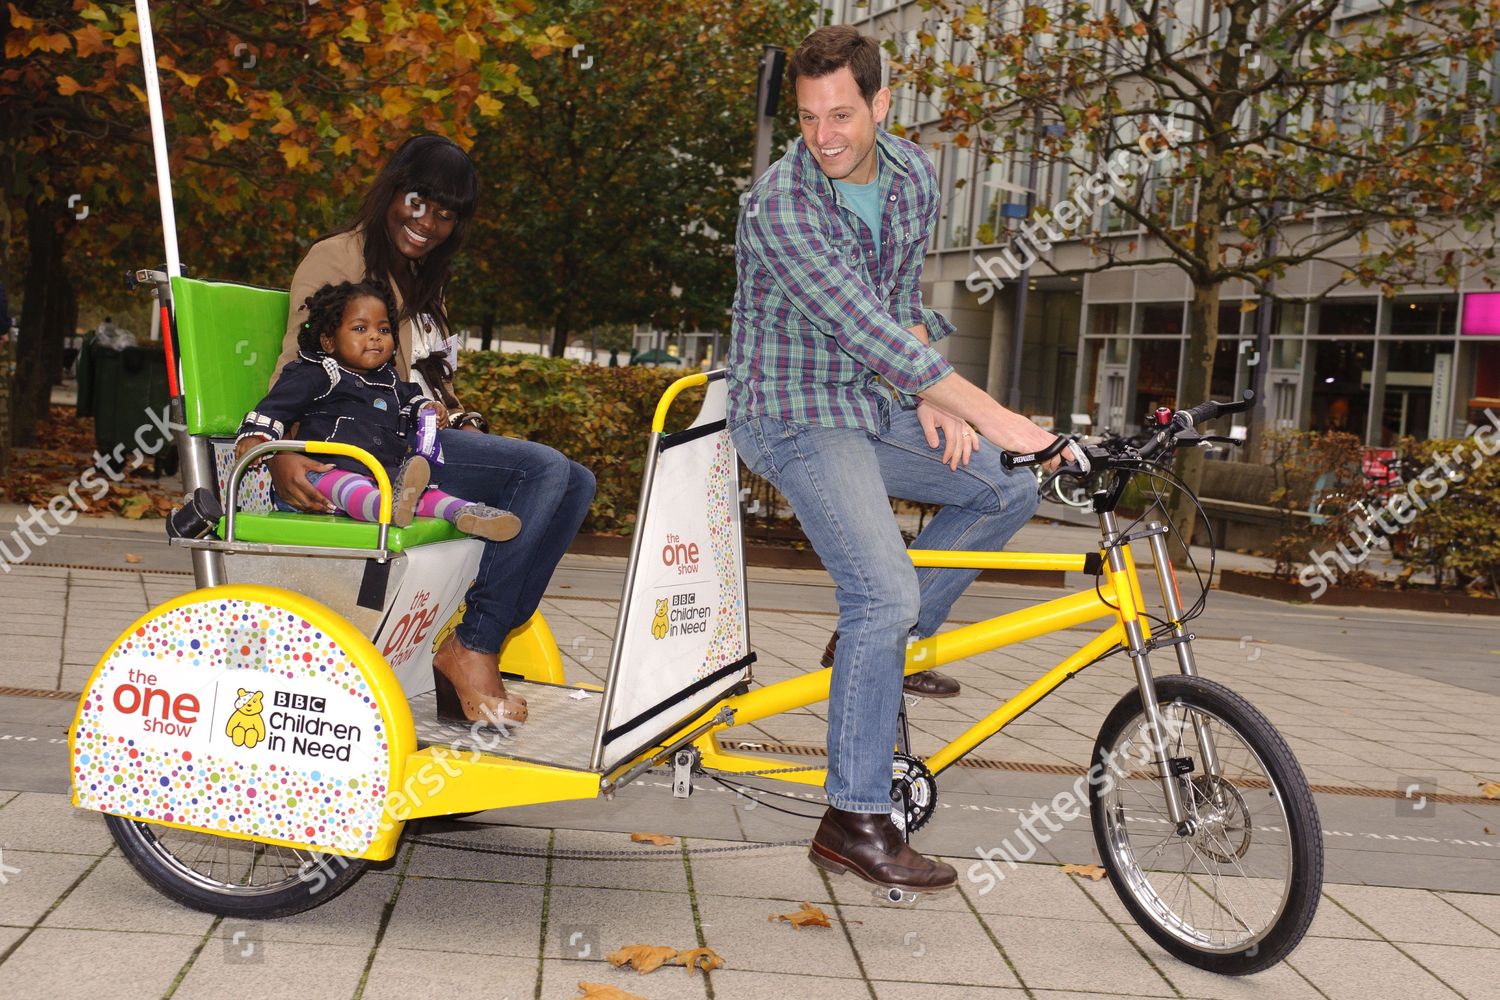 matt-baker-children-in-need-cycle-ride-london-britain-shutterstock-editorial-1489940j.jpg